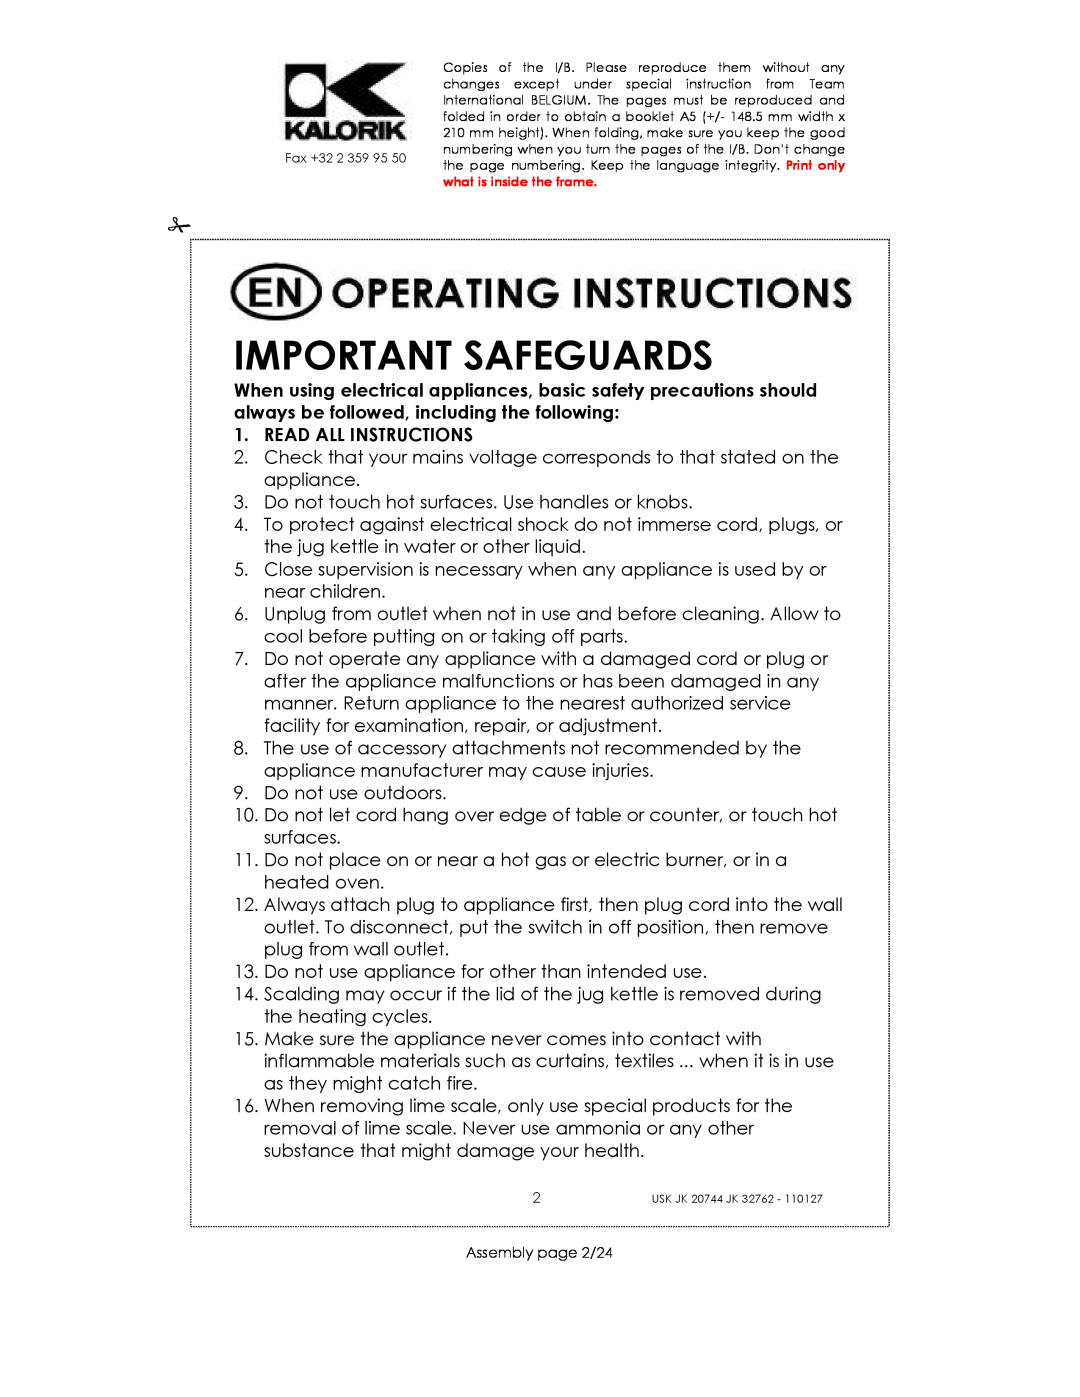 Kalorik USK JK 32762, USK JK 20744 manual Important Safeguards, Read All Instructions 